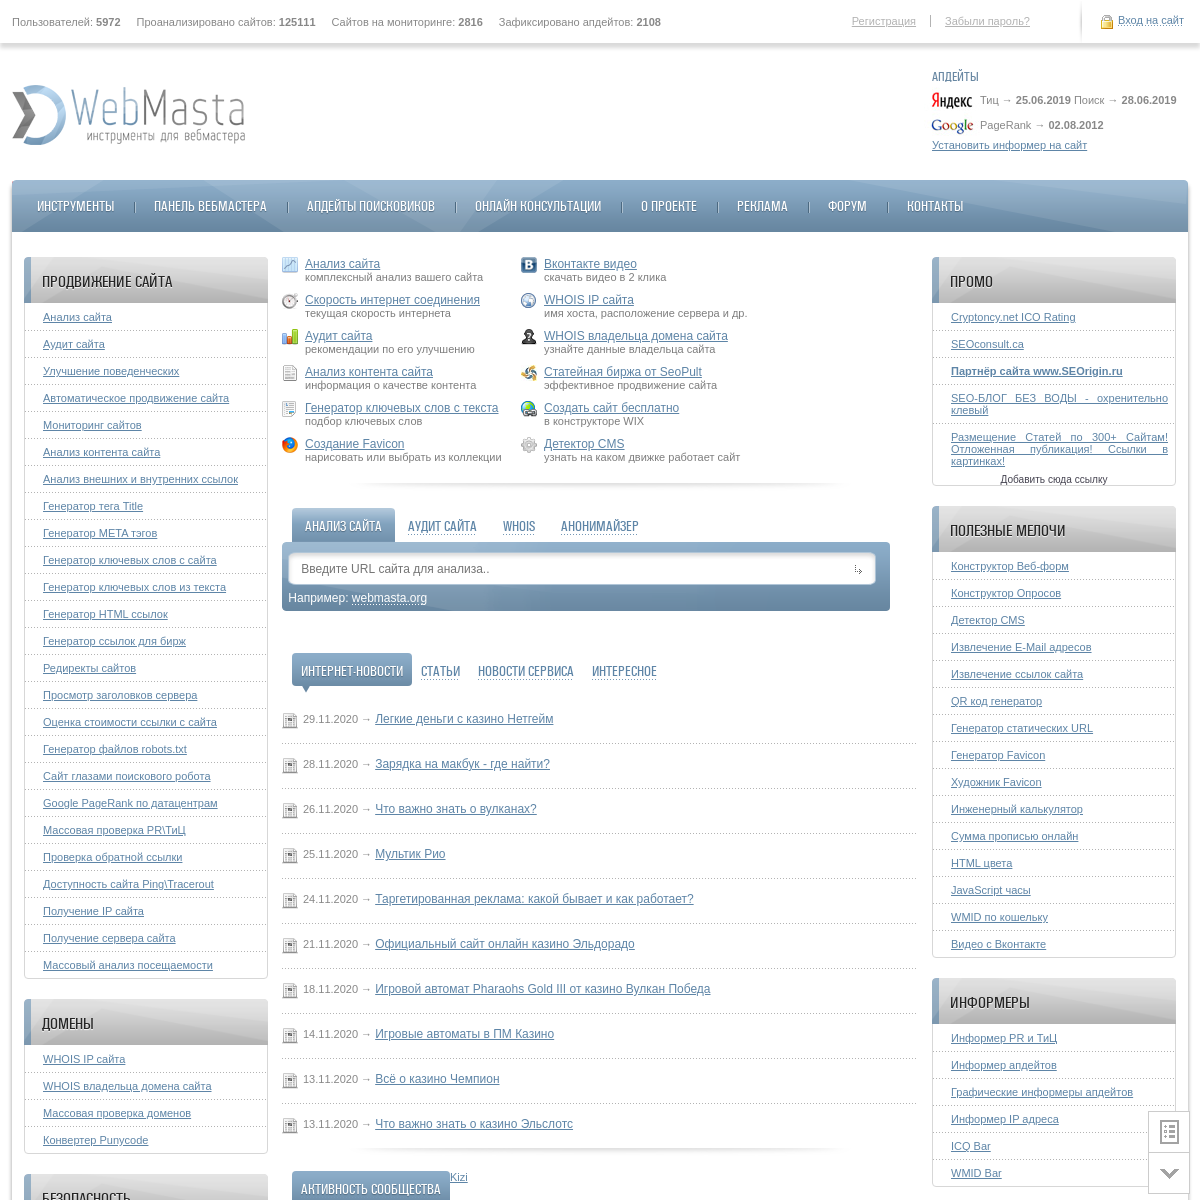 A complete backup of webmasta.org